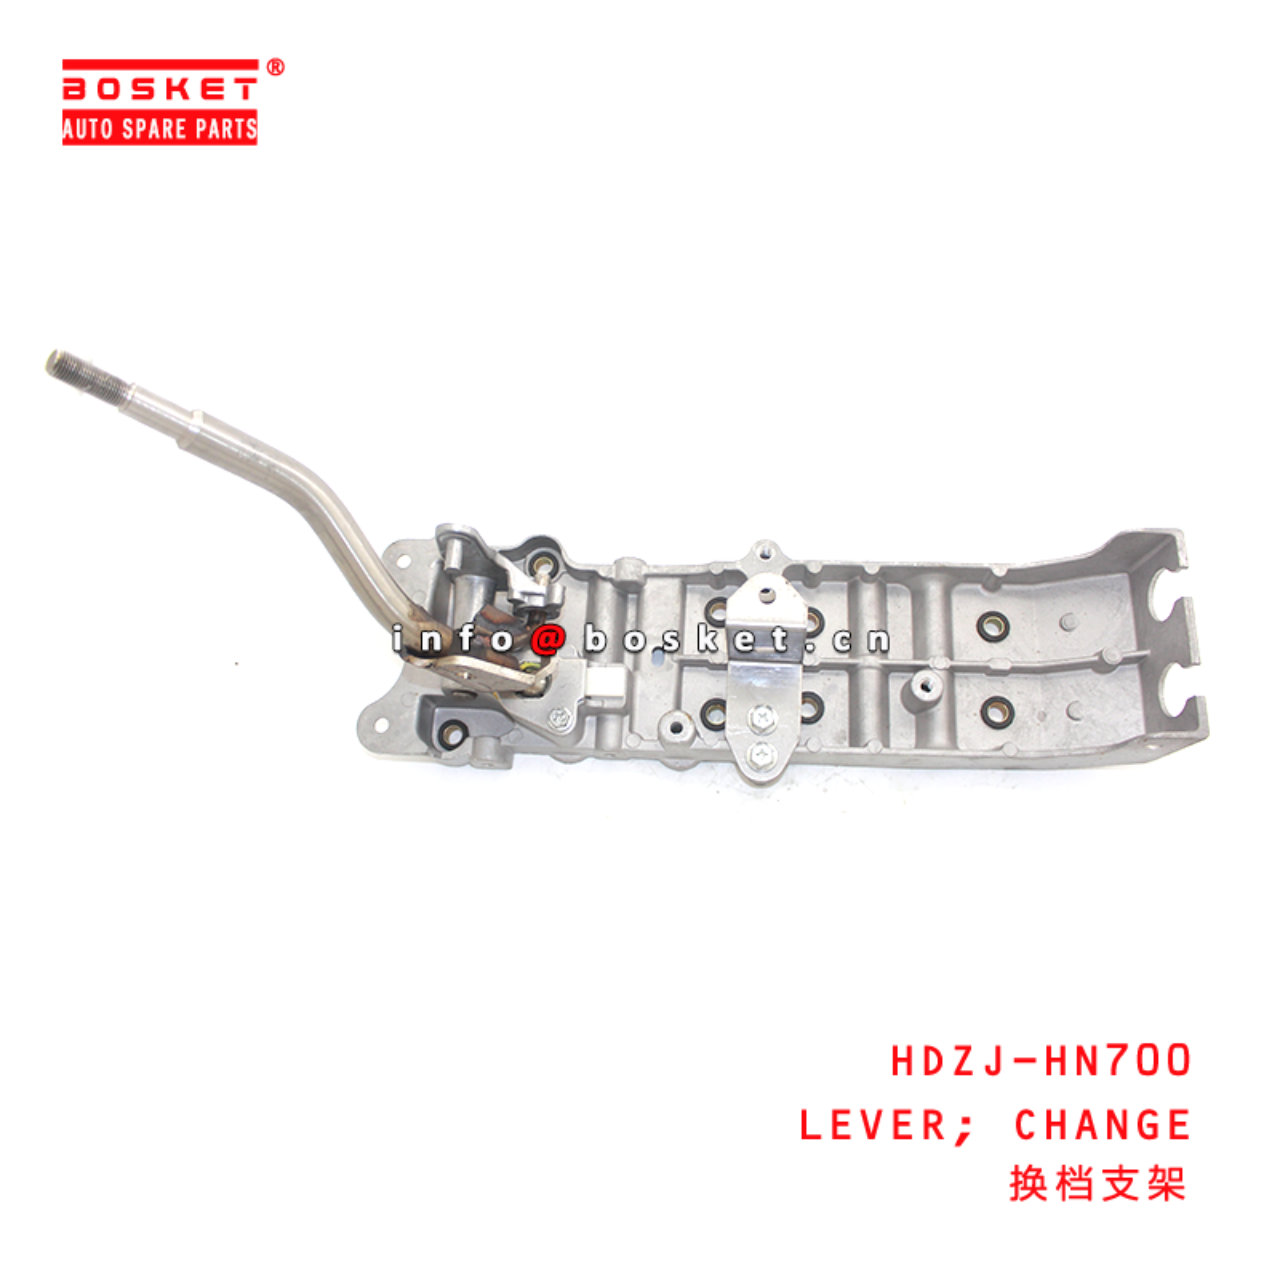 HDZJ-HN700 Change Lever Suitable for ISUZU HINO 700